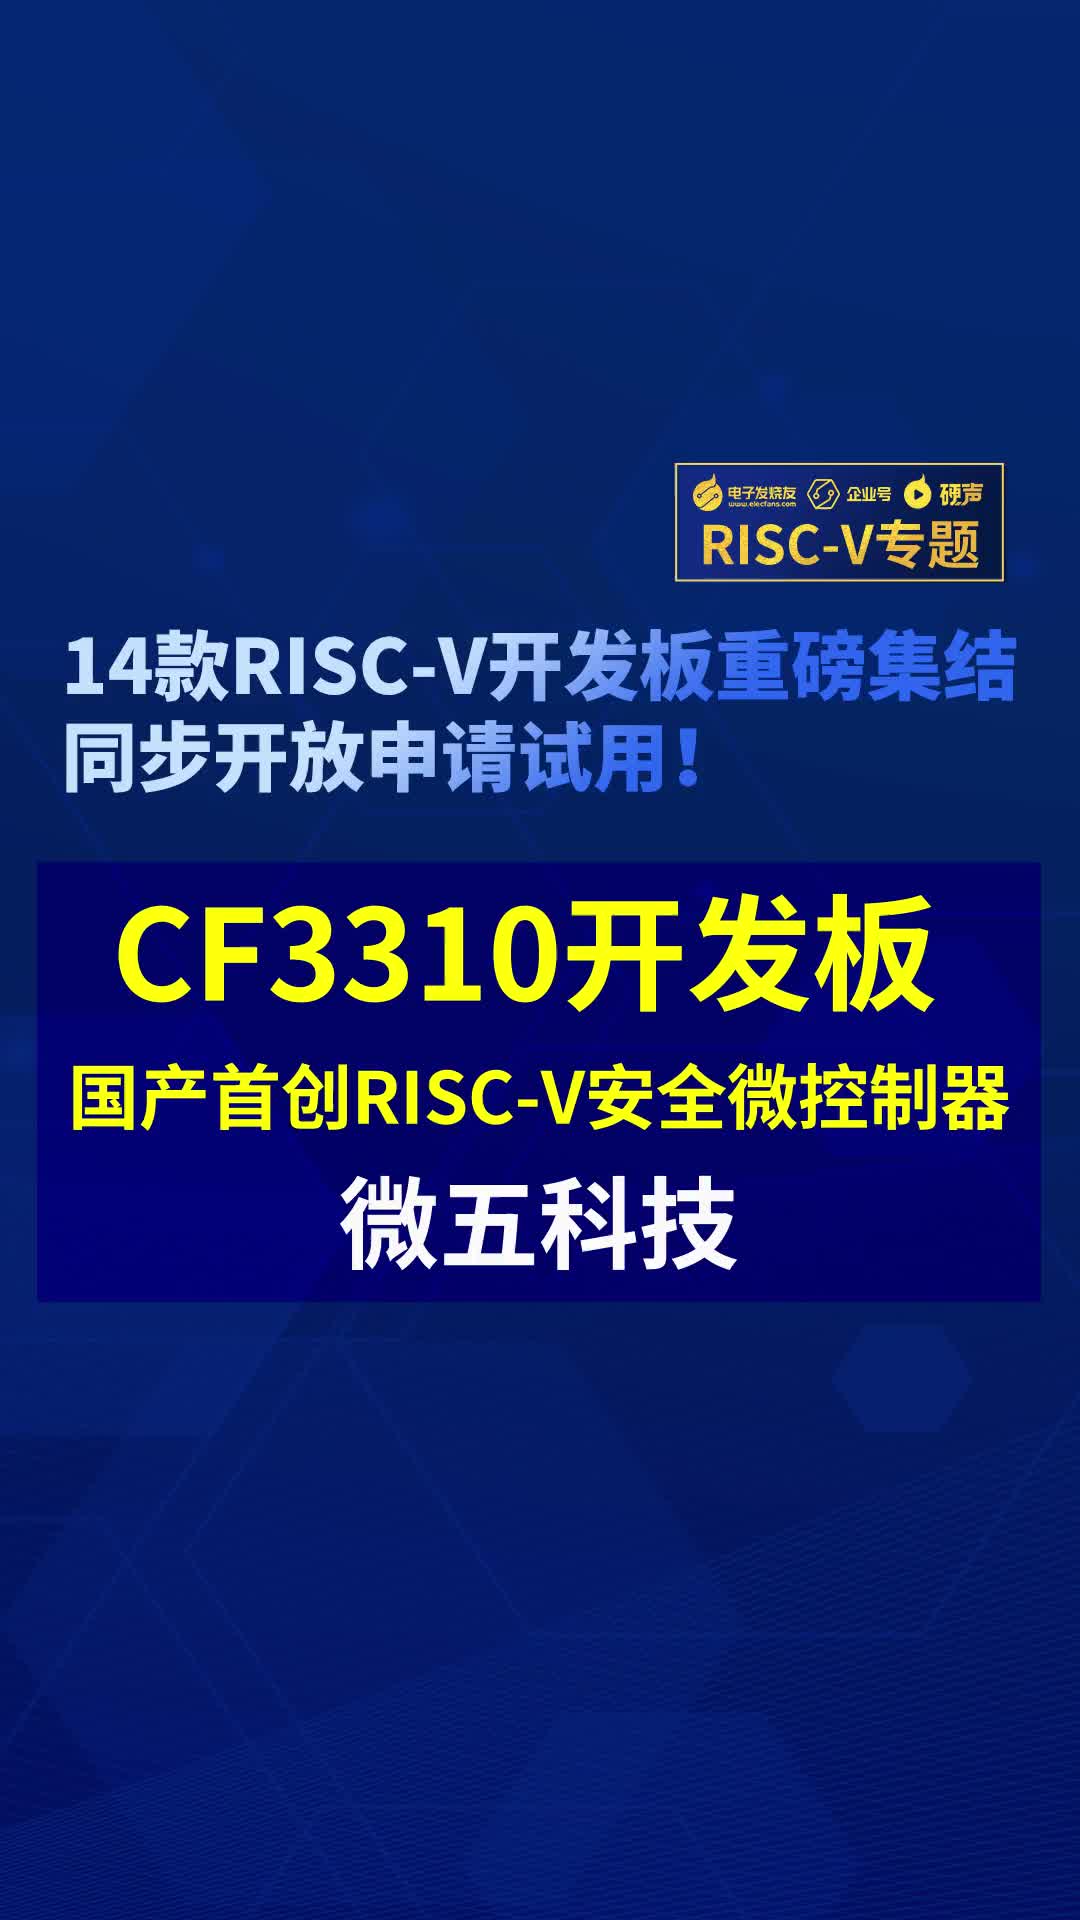 【RISC-V专题】国产首创RISC-V安全控制器CF3310免费试用#RISC-V开发板评测 